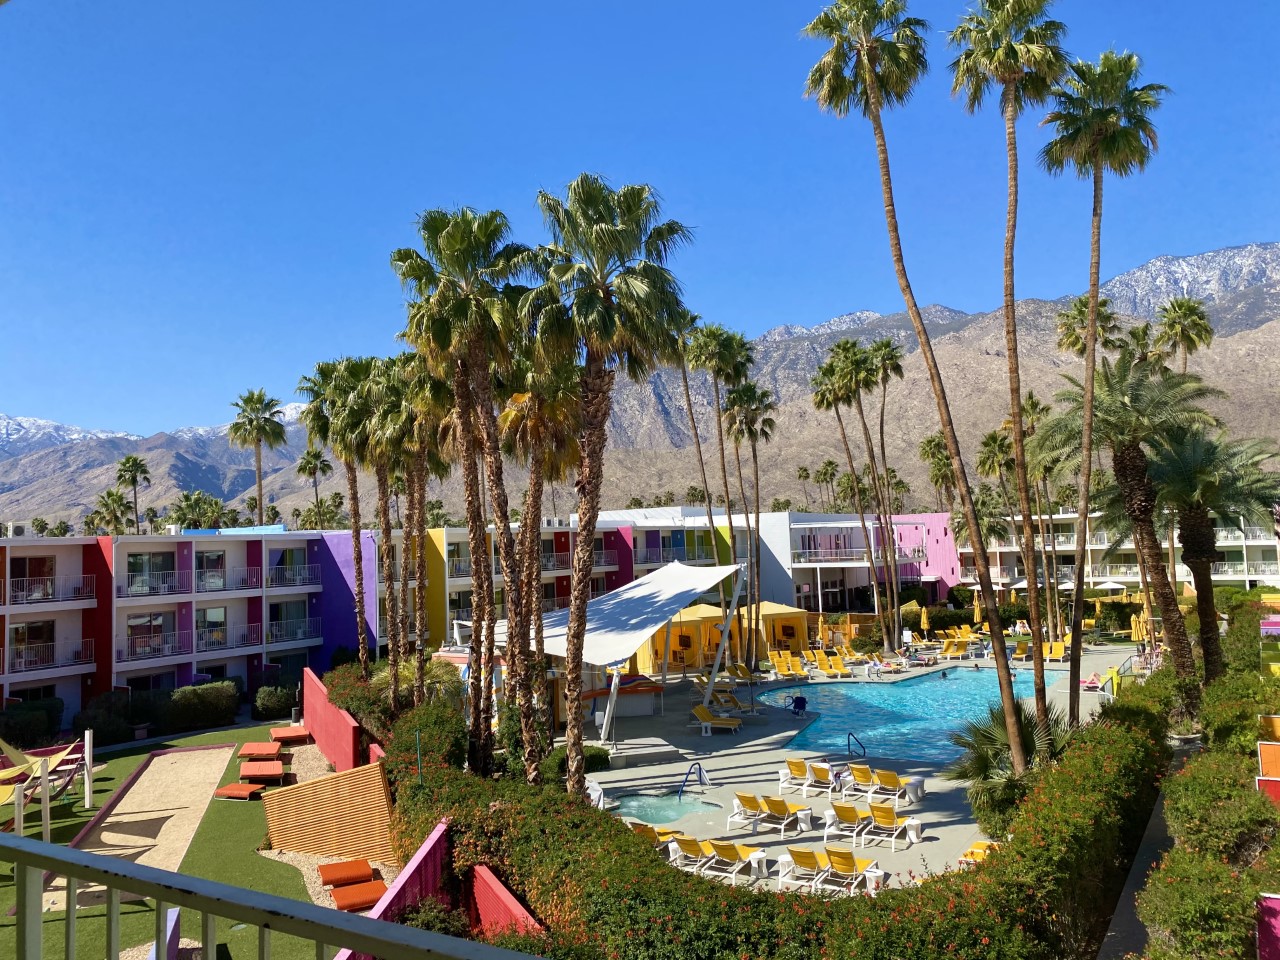 Jessica's Palm Springs Travel Guide - Palm Springs